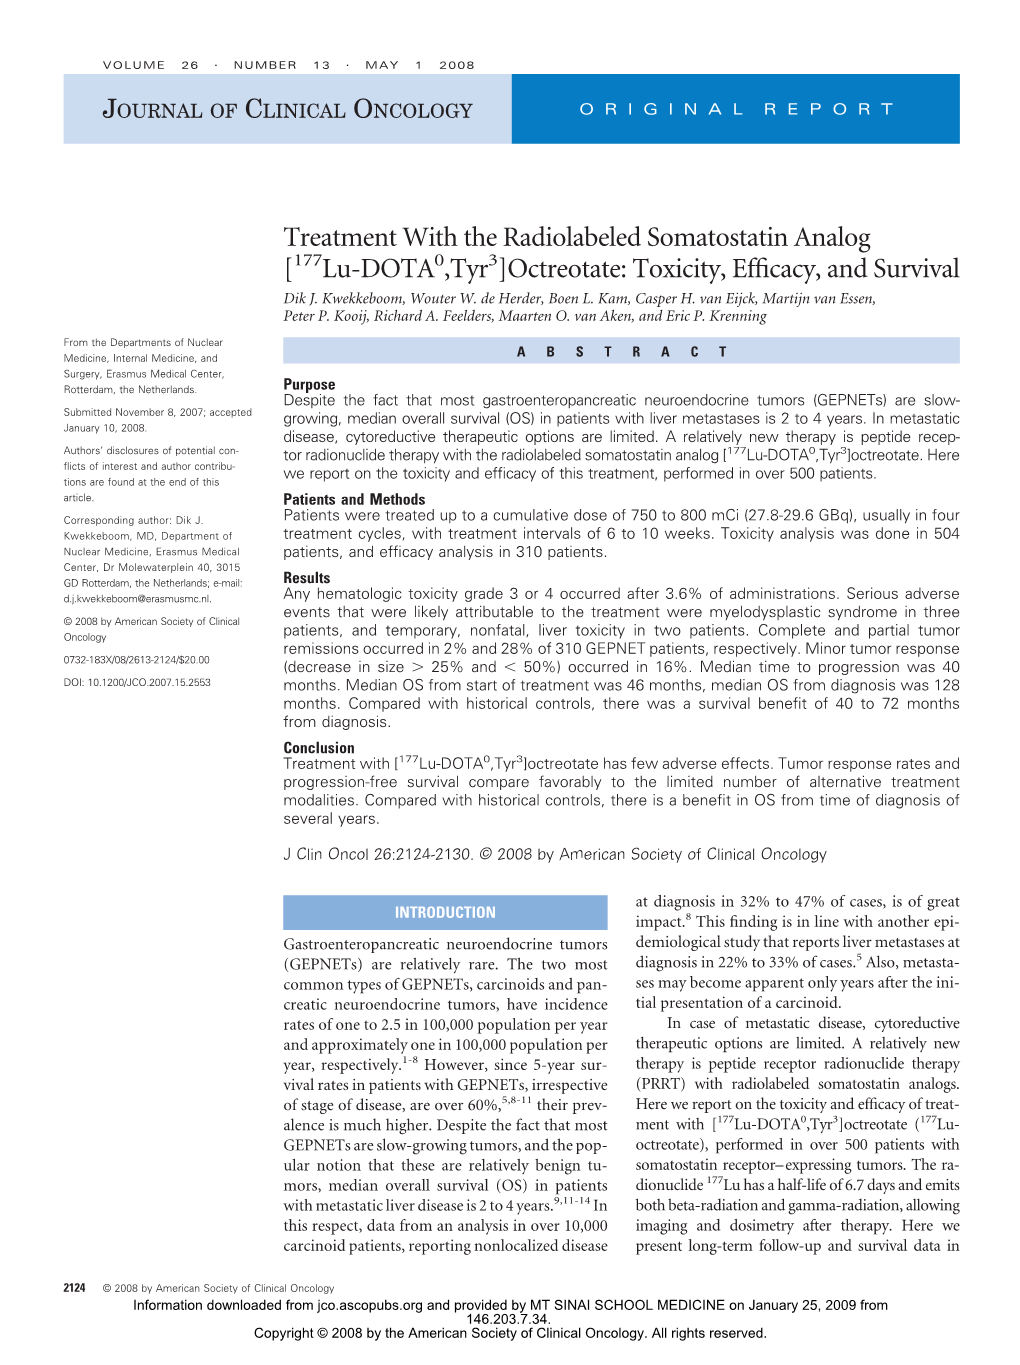 Treatment with the Radiolabeled Somatostatin Analog [177Lu-DOTA0,Tyr3]Octreotate: Toxicity, Efﬁcacy, and Survival Dik J